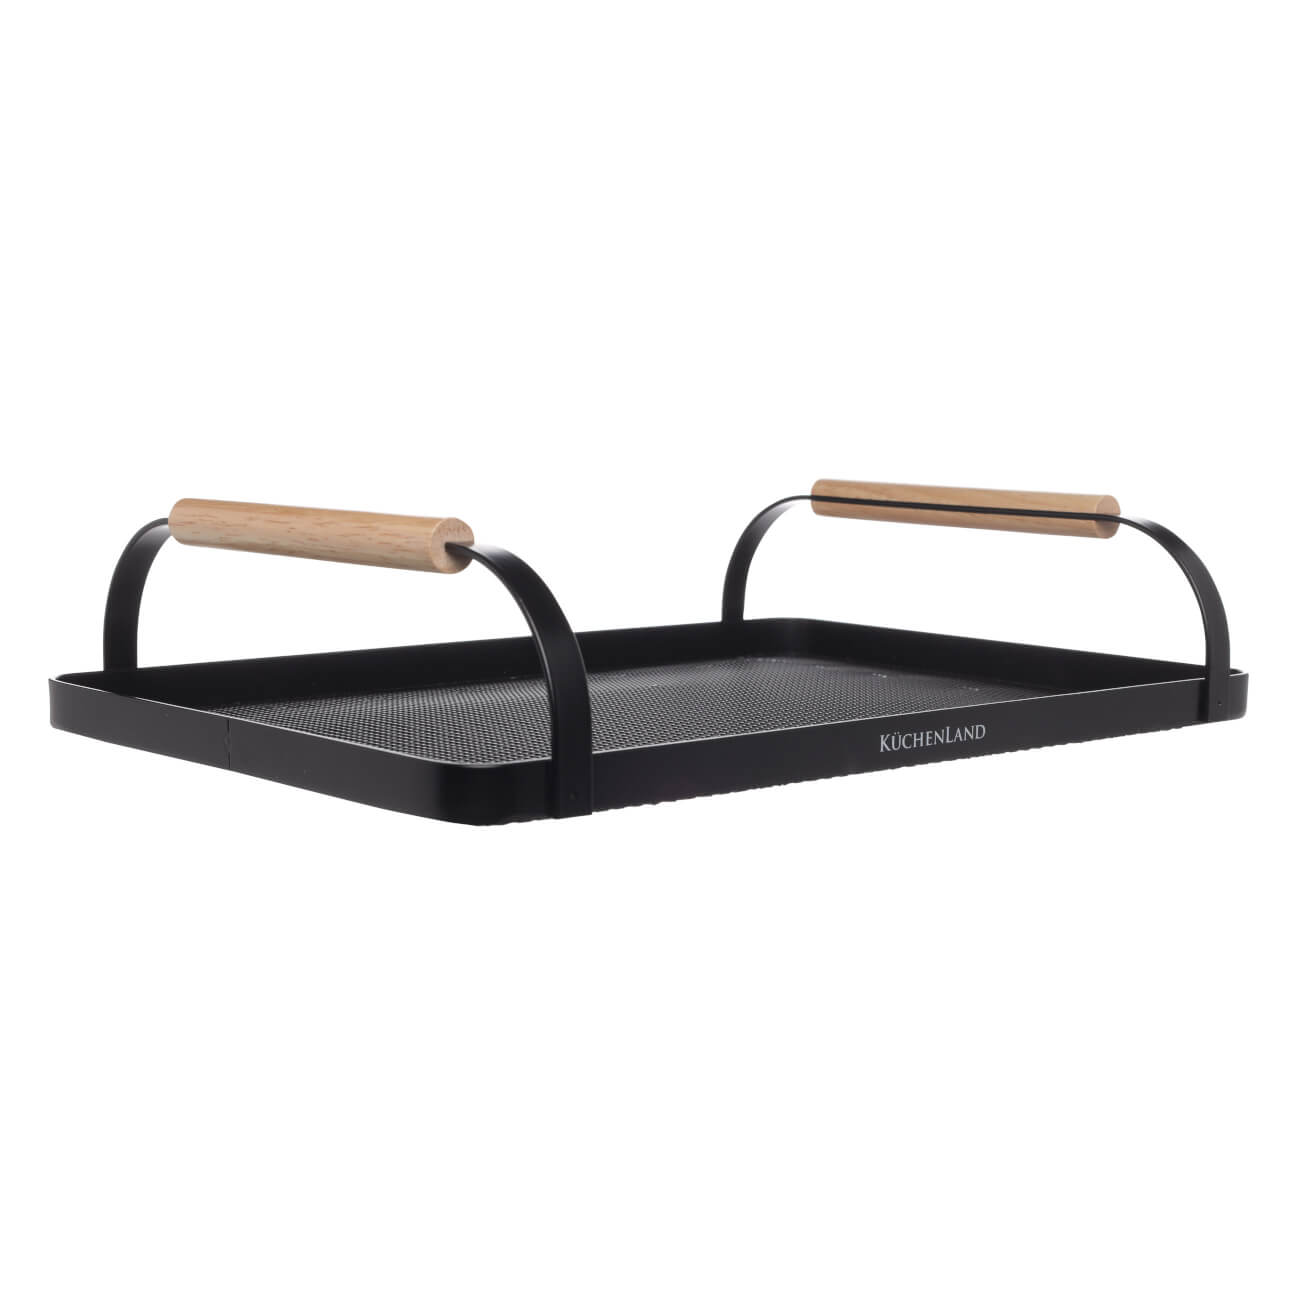 Tray, 33x23 cm, with handles, metal / wood, rectangular, black, Black style изображение № 1